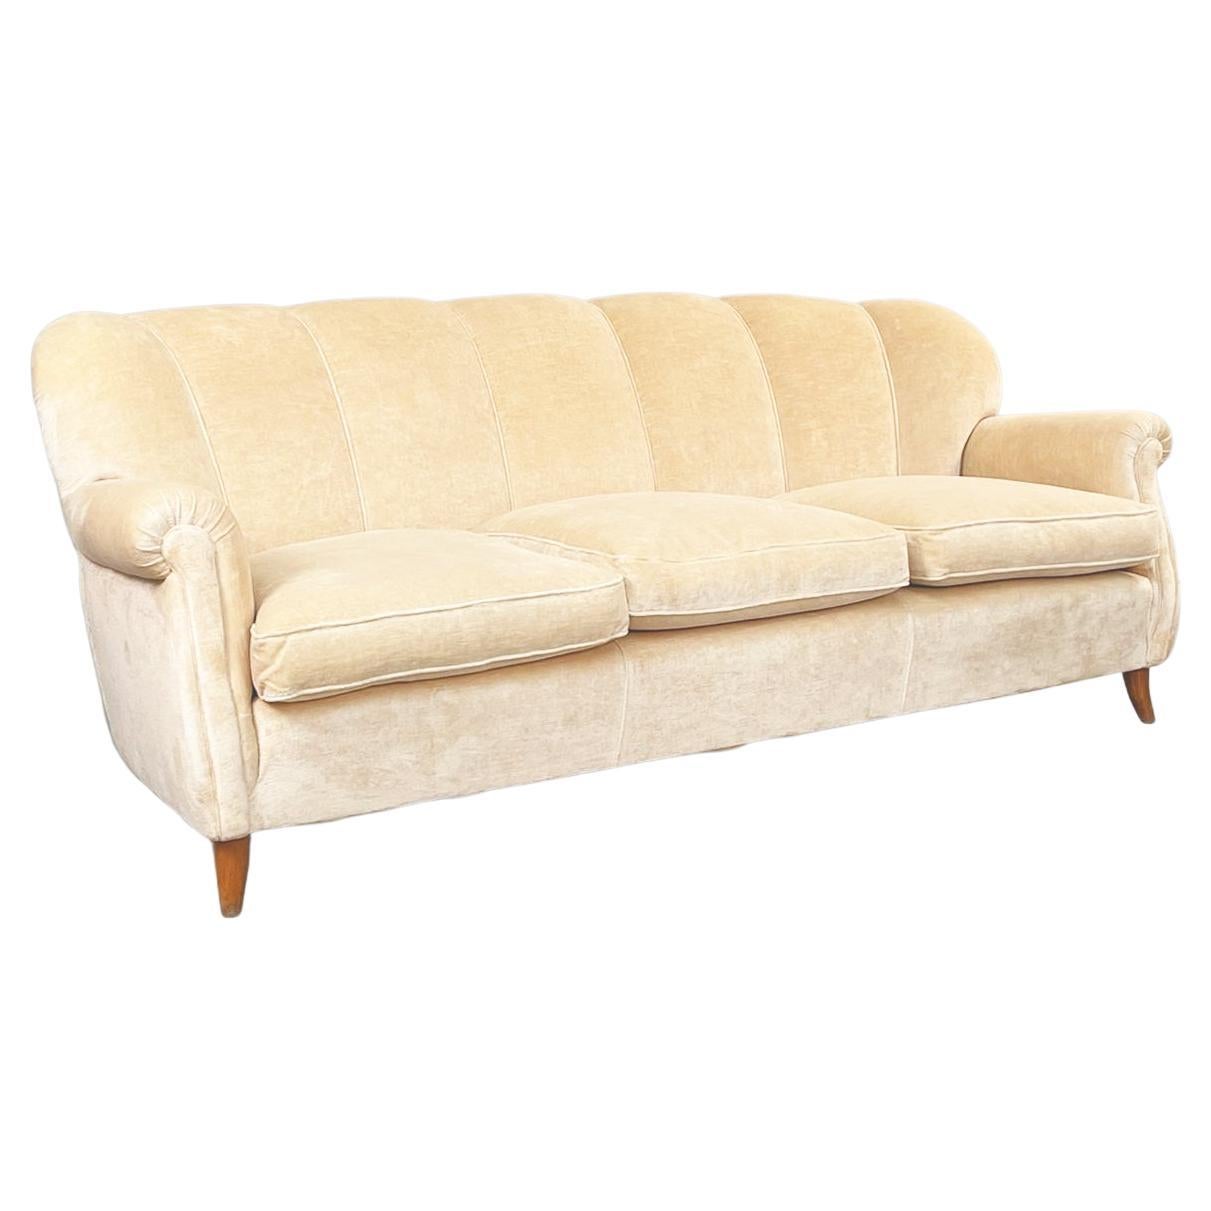 Italian Mid-Century Modern Wooden Sofa in Beige Fabric, 1960s For Sale